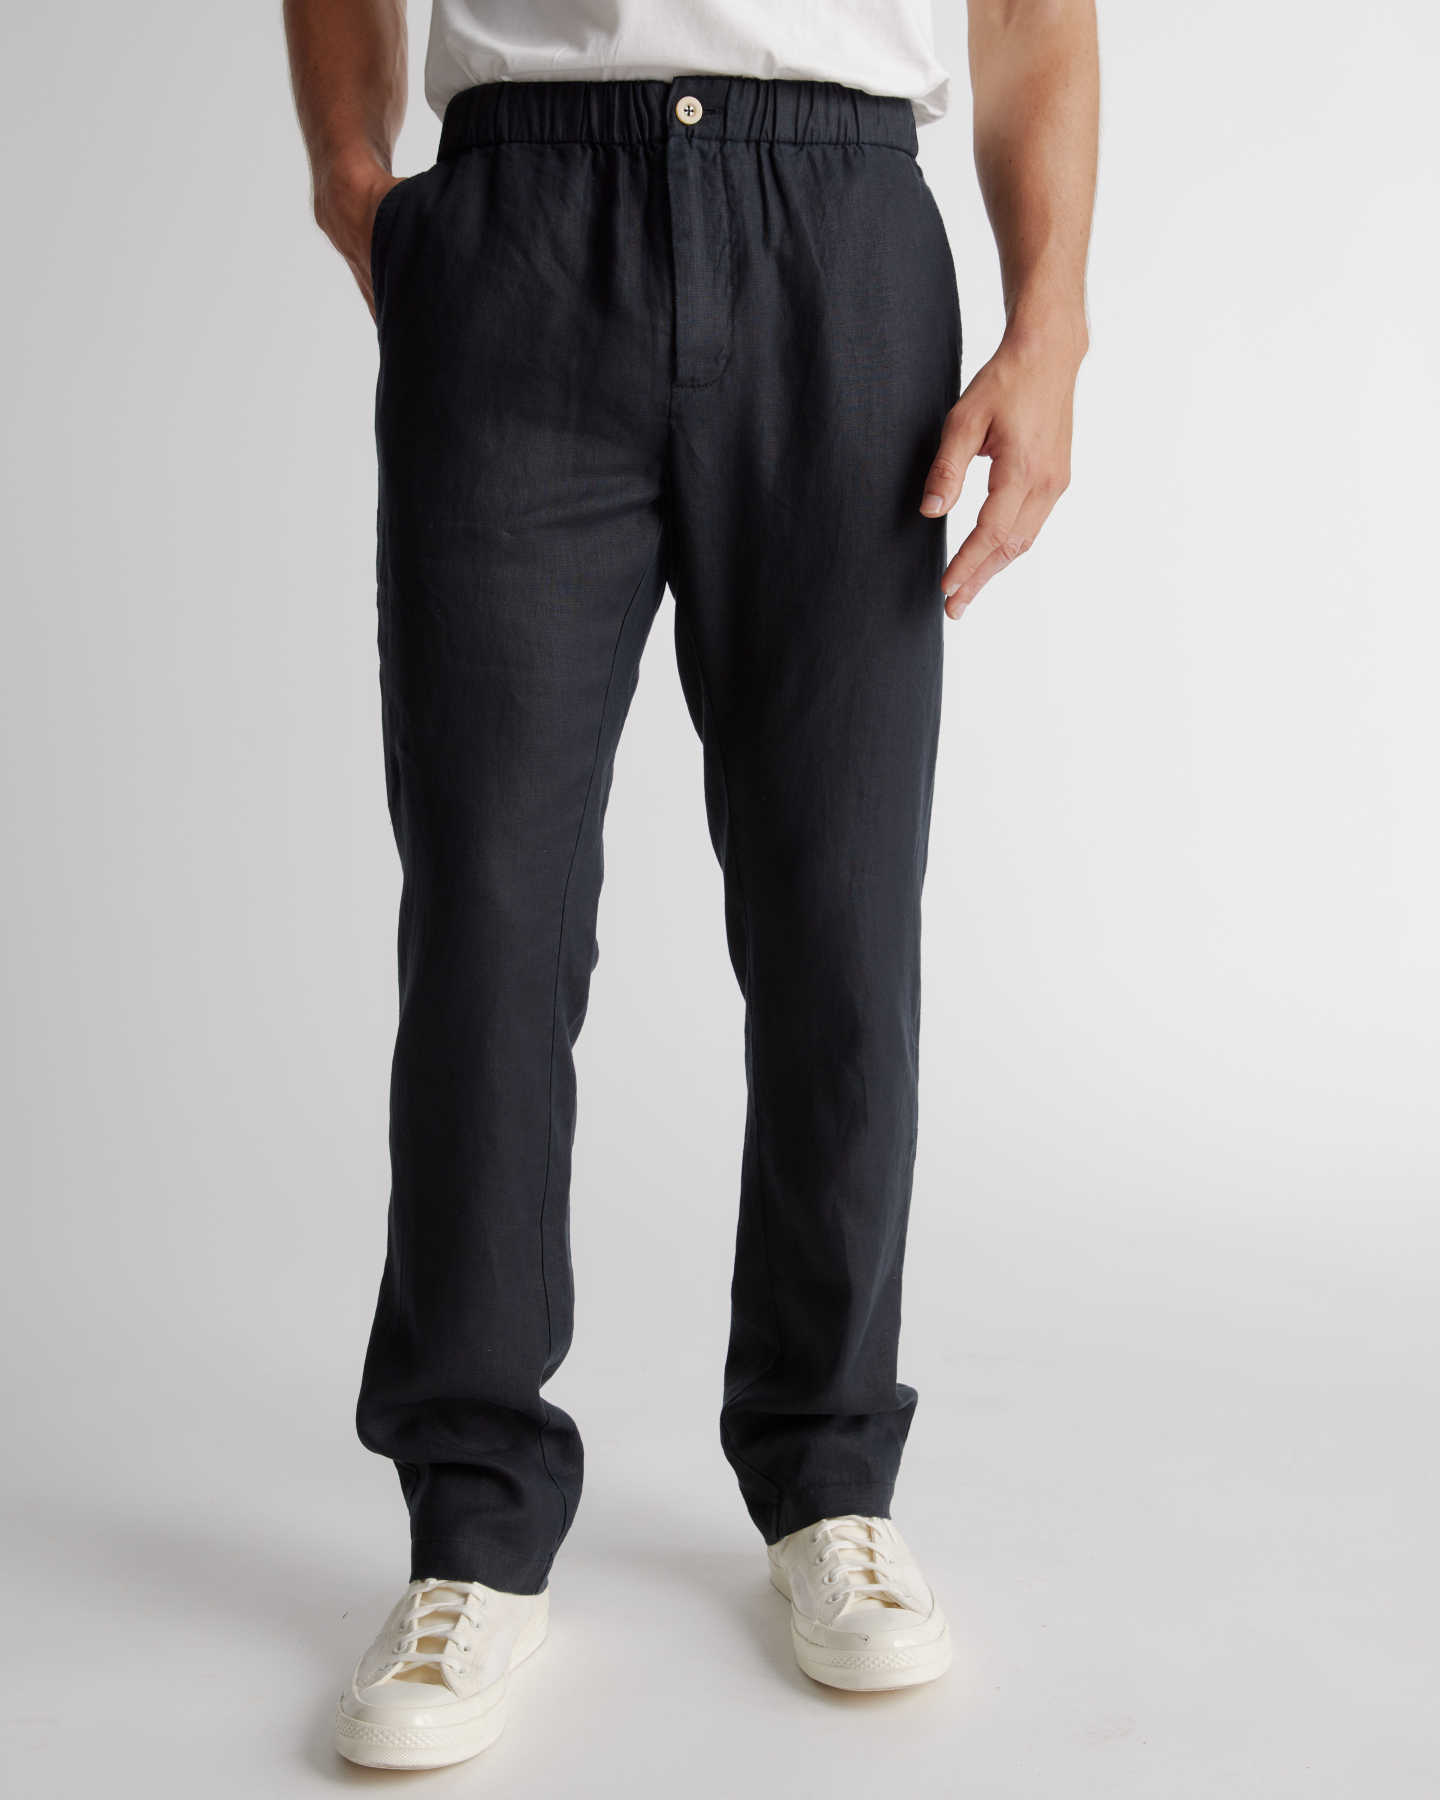 100% European Linen Pants - Black - 4 - Thumbnail